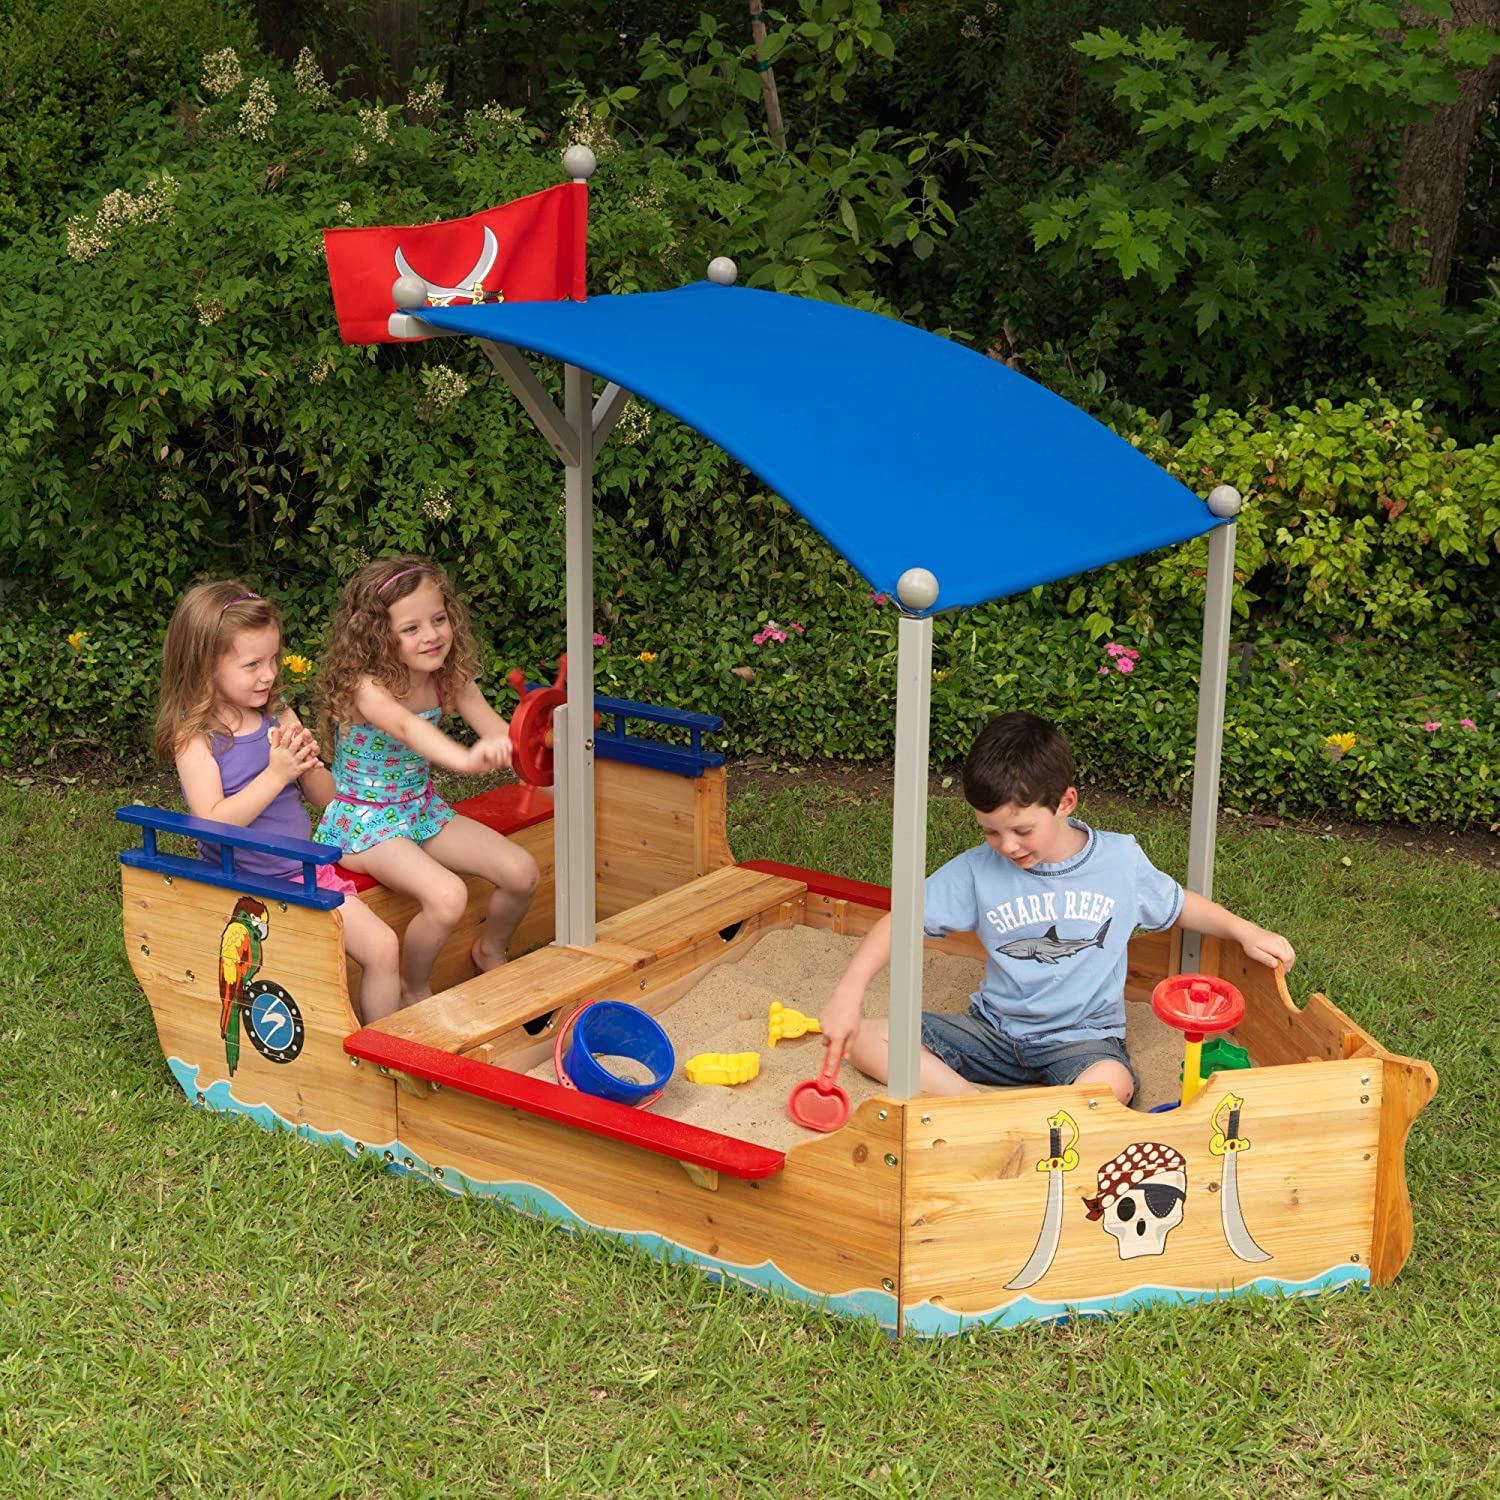 KidKraft Wooden Pirate Sandbox with Canopy Featured